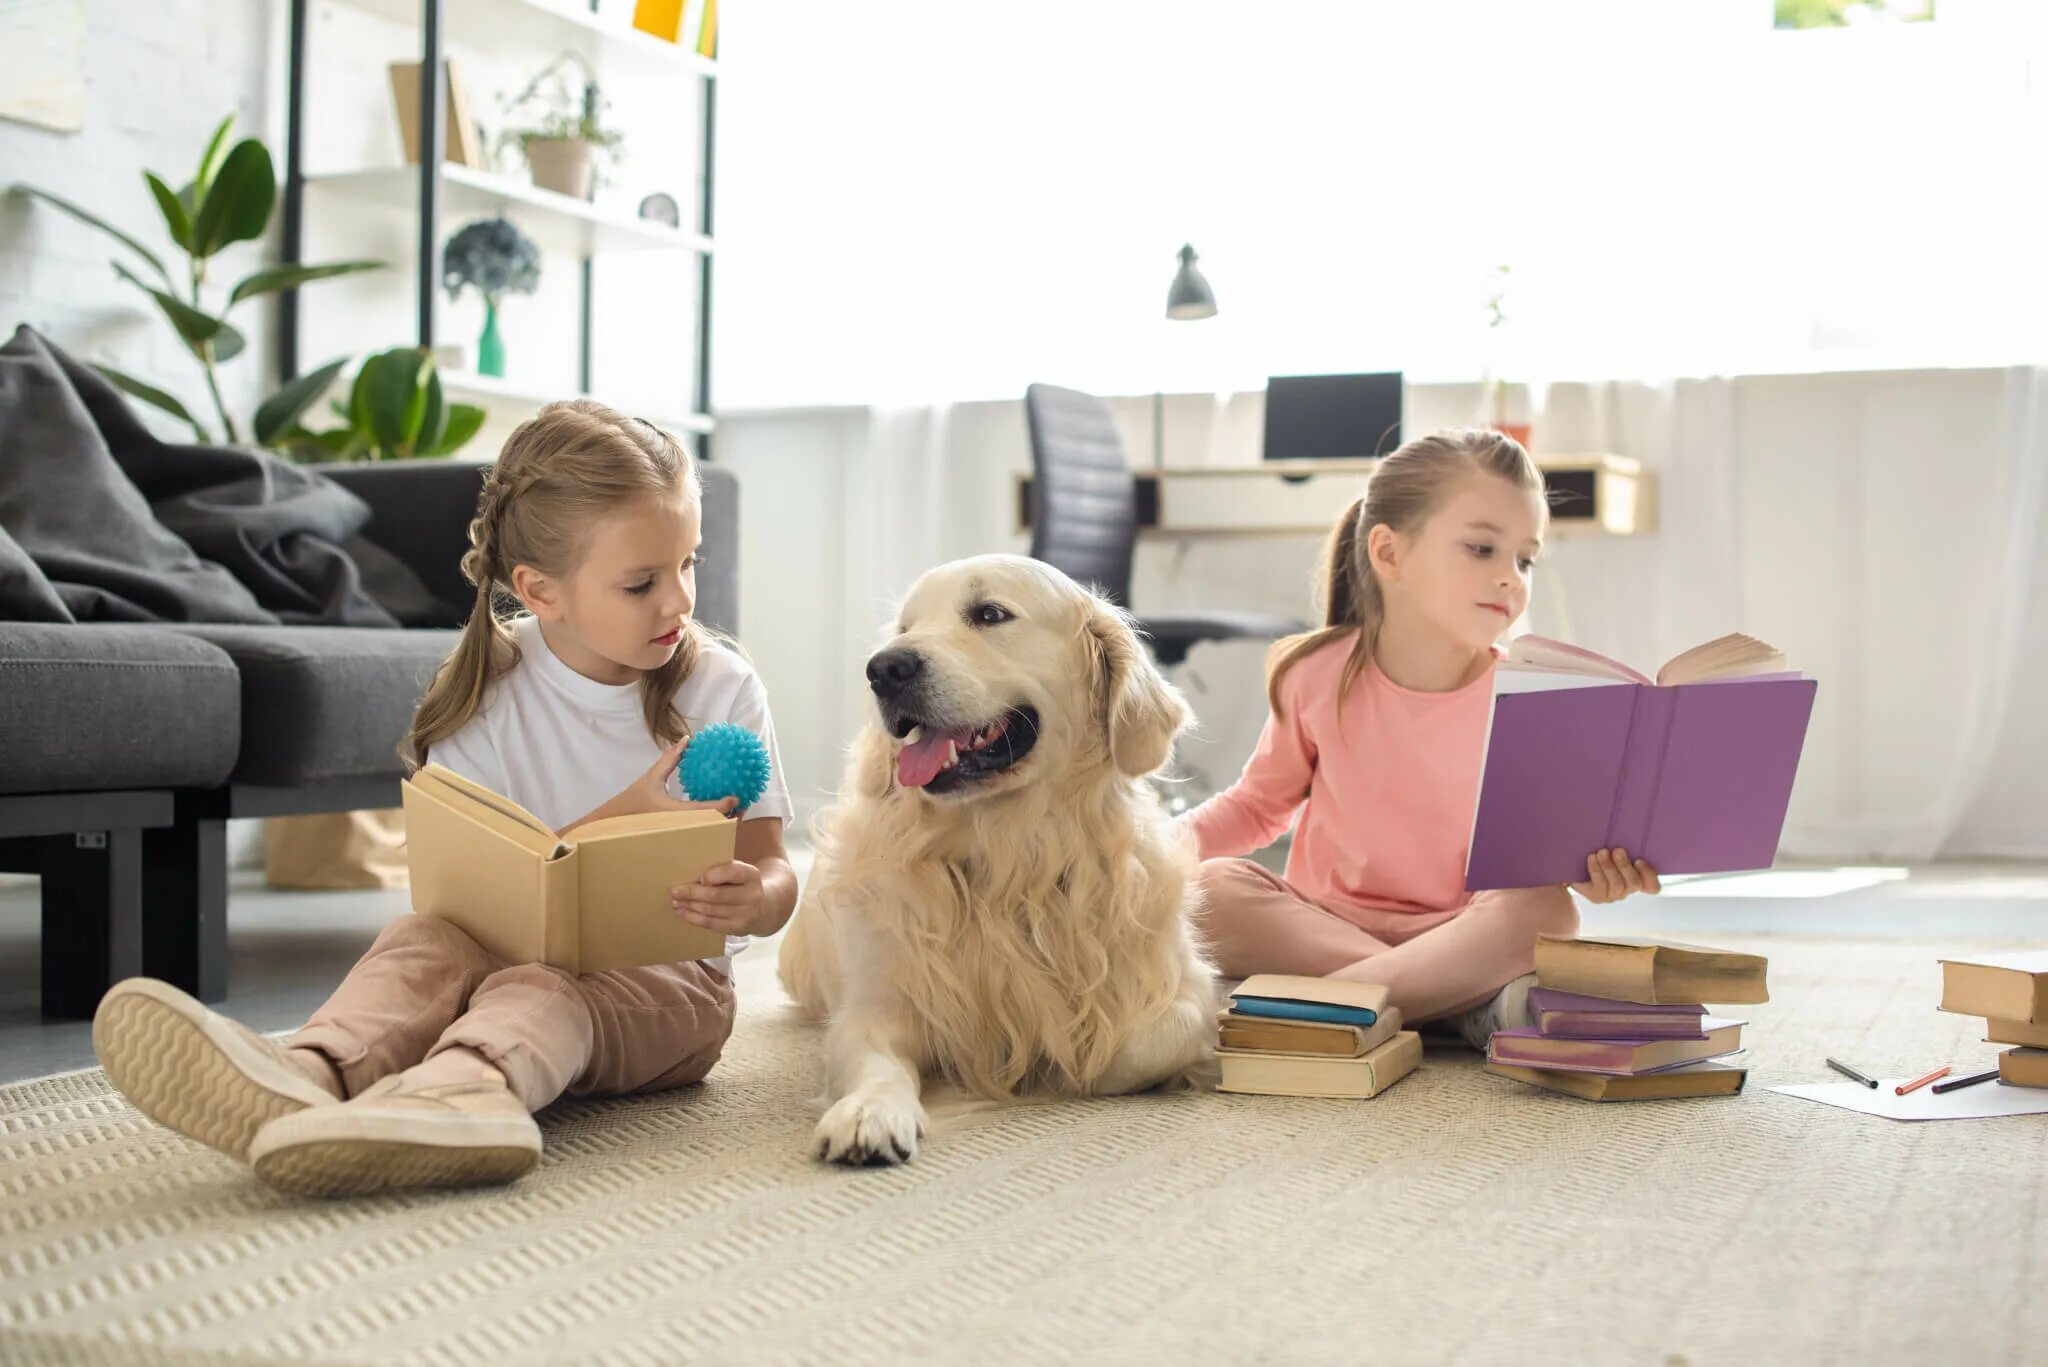 Having pets at home. Ретривер слушает как ребенок читает книгу. Ретривер лежит ребенок читает книгу. Bring Pets to School. Job picture Pet.